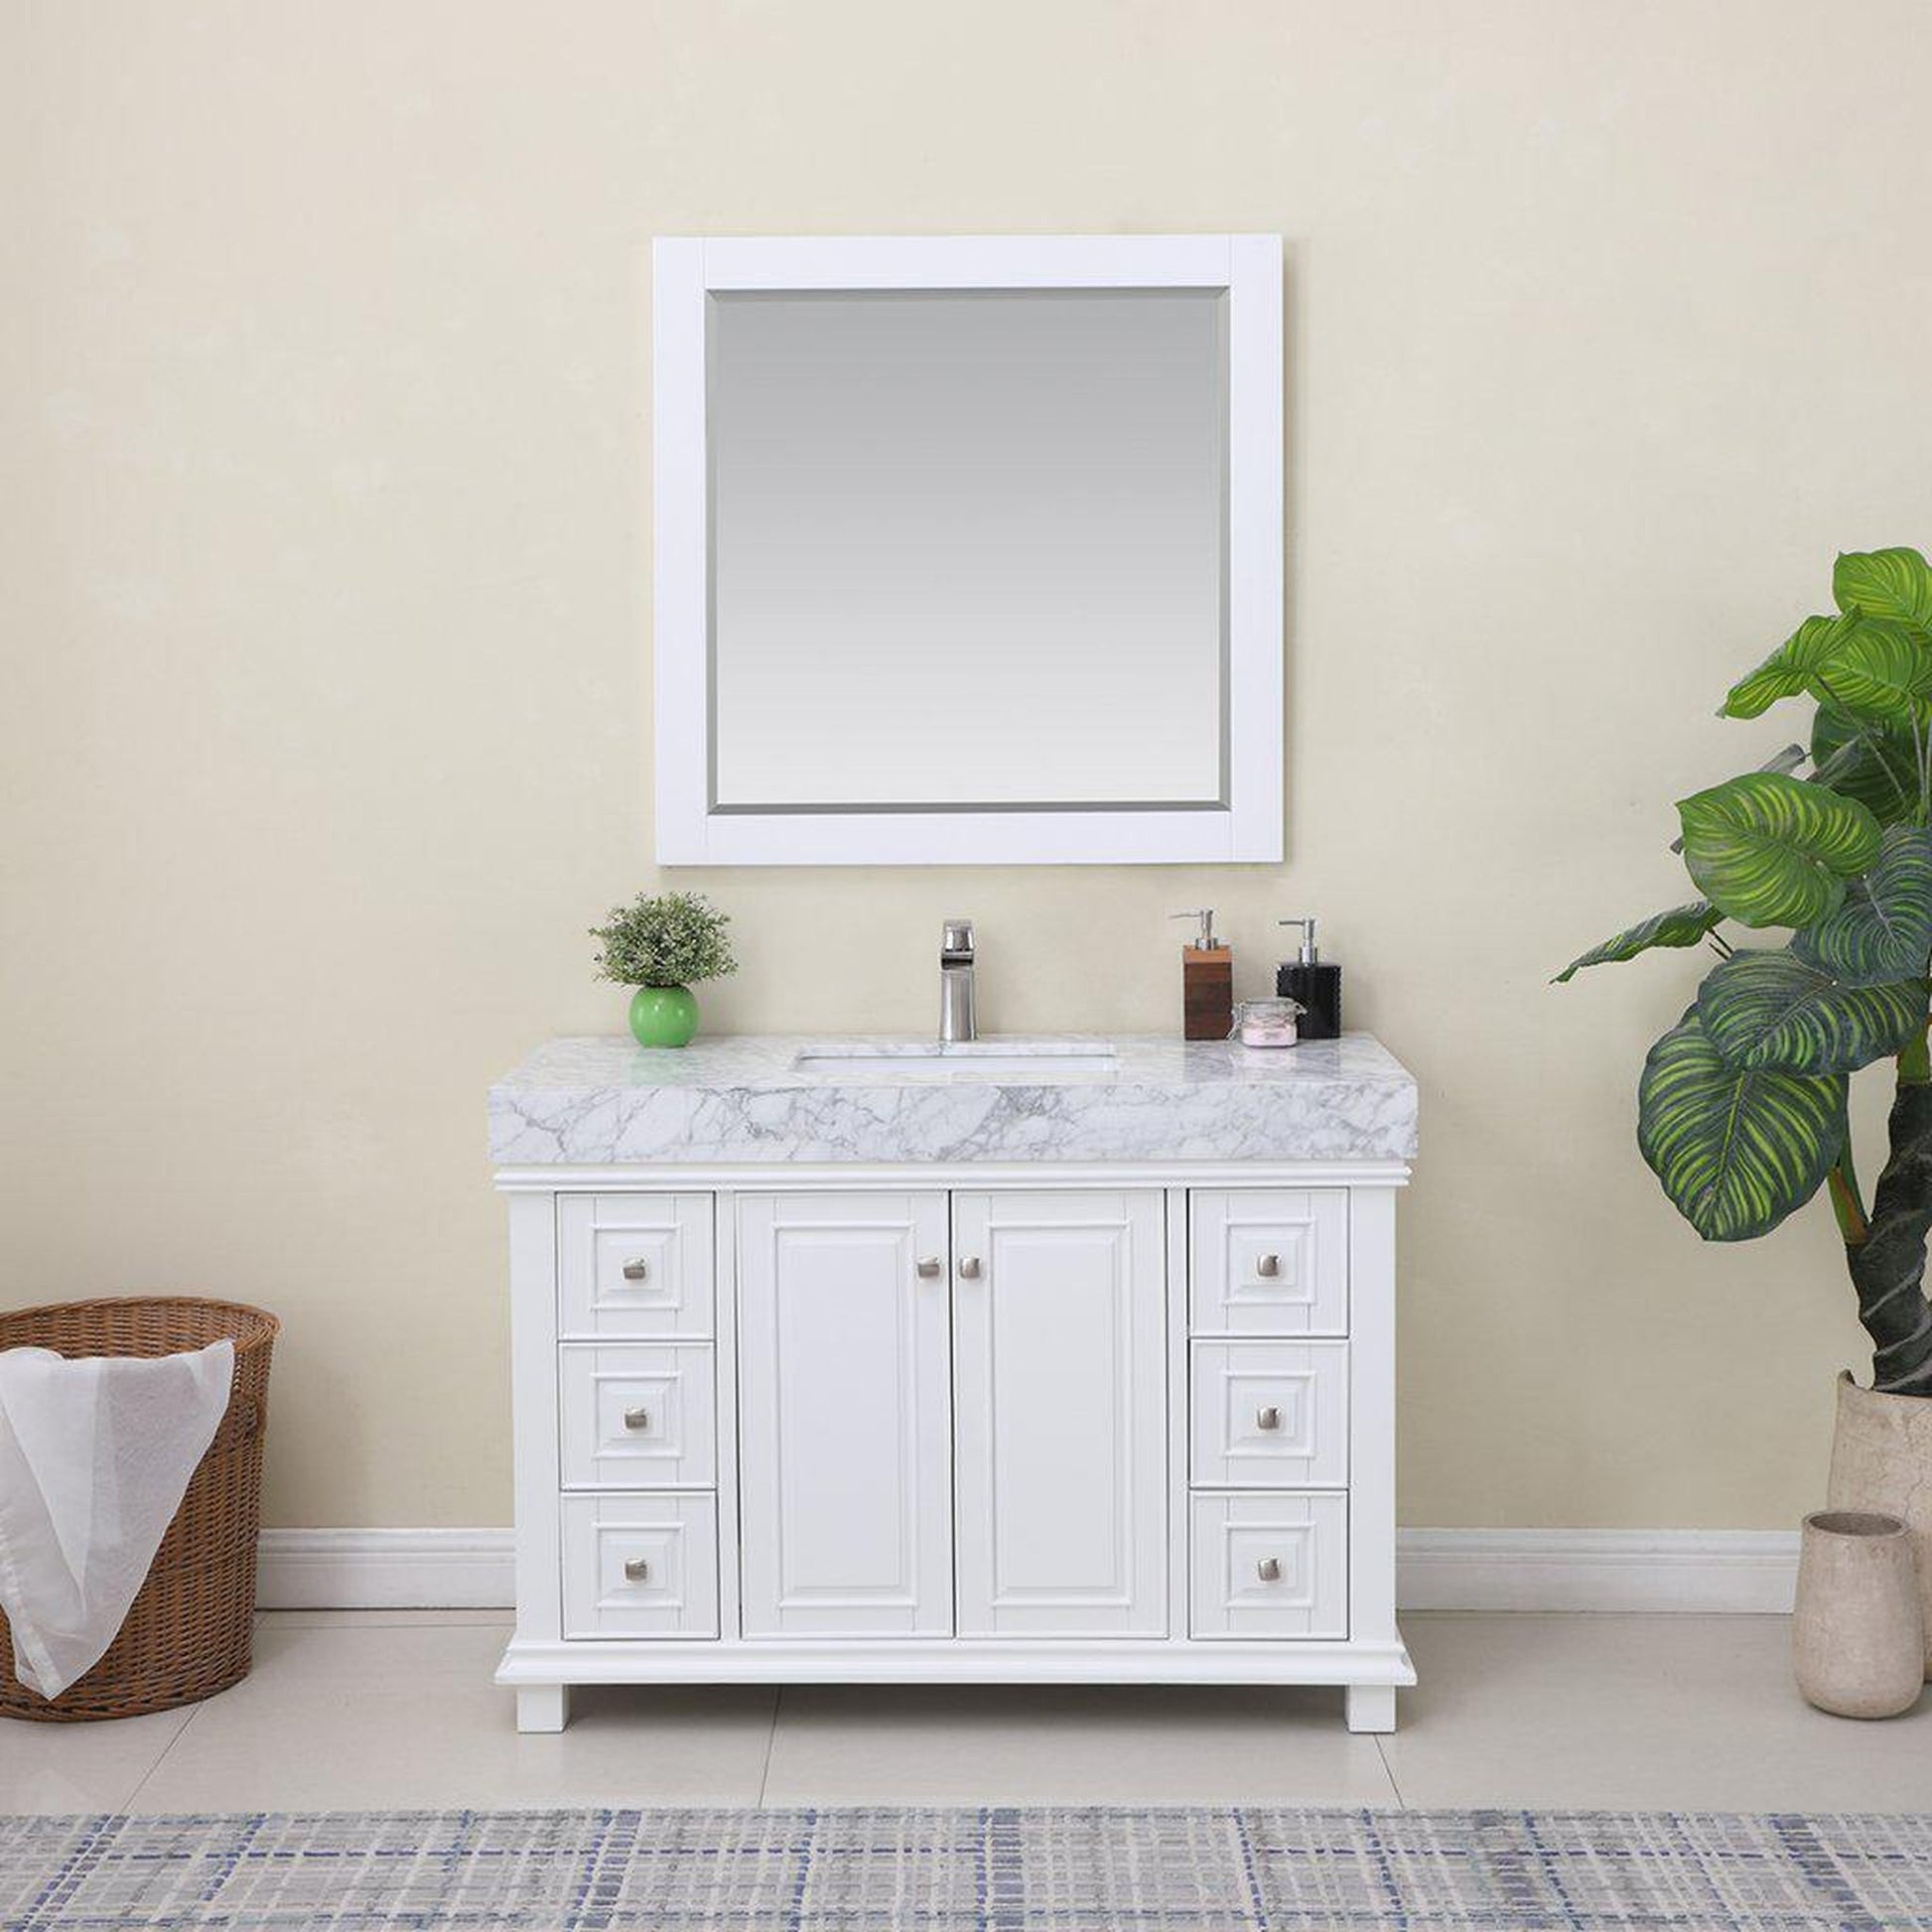 Altair Jardin 48" Single White Freestanding Bathroom Vanity Set With Mirror, Natural Carrara White Marble Top, Rectangular Undermount Ceramic Sink, and Overflow